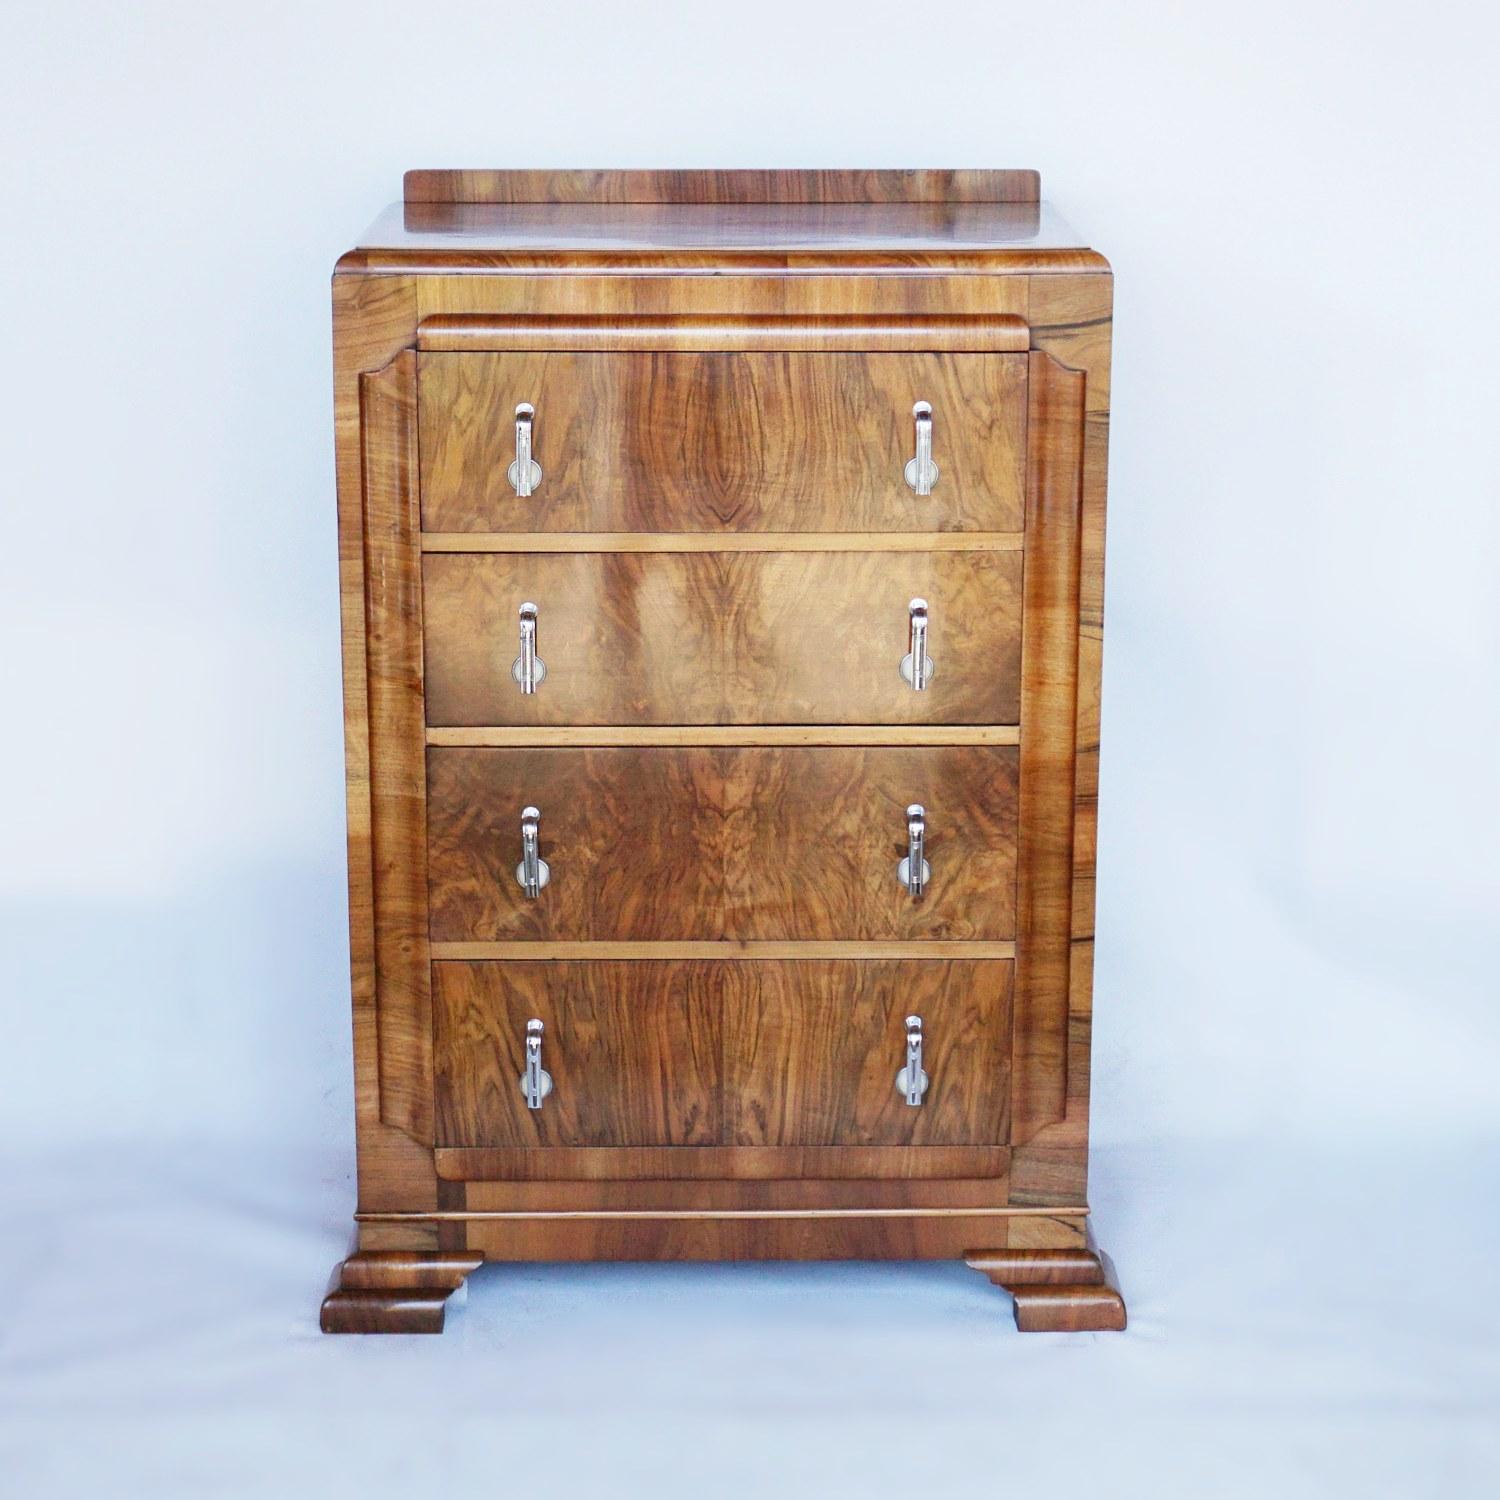 An Art Deco chest of drawers. Burr walnut and figured walnut veneered with original metal and bakelite handles.

Dimensions: H 114cm, W 75cm, D 47cm

Origin: English

Date: circa 1935

Item number: 0103211.
   